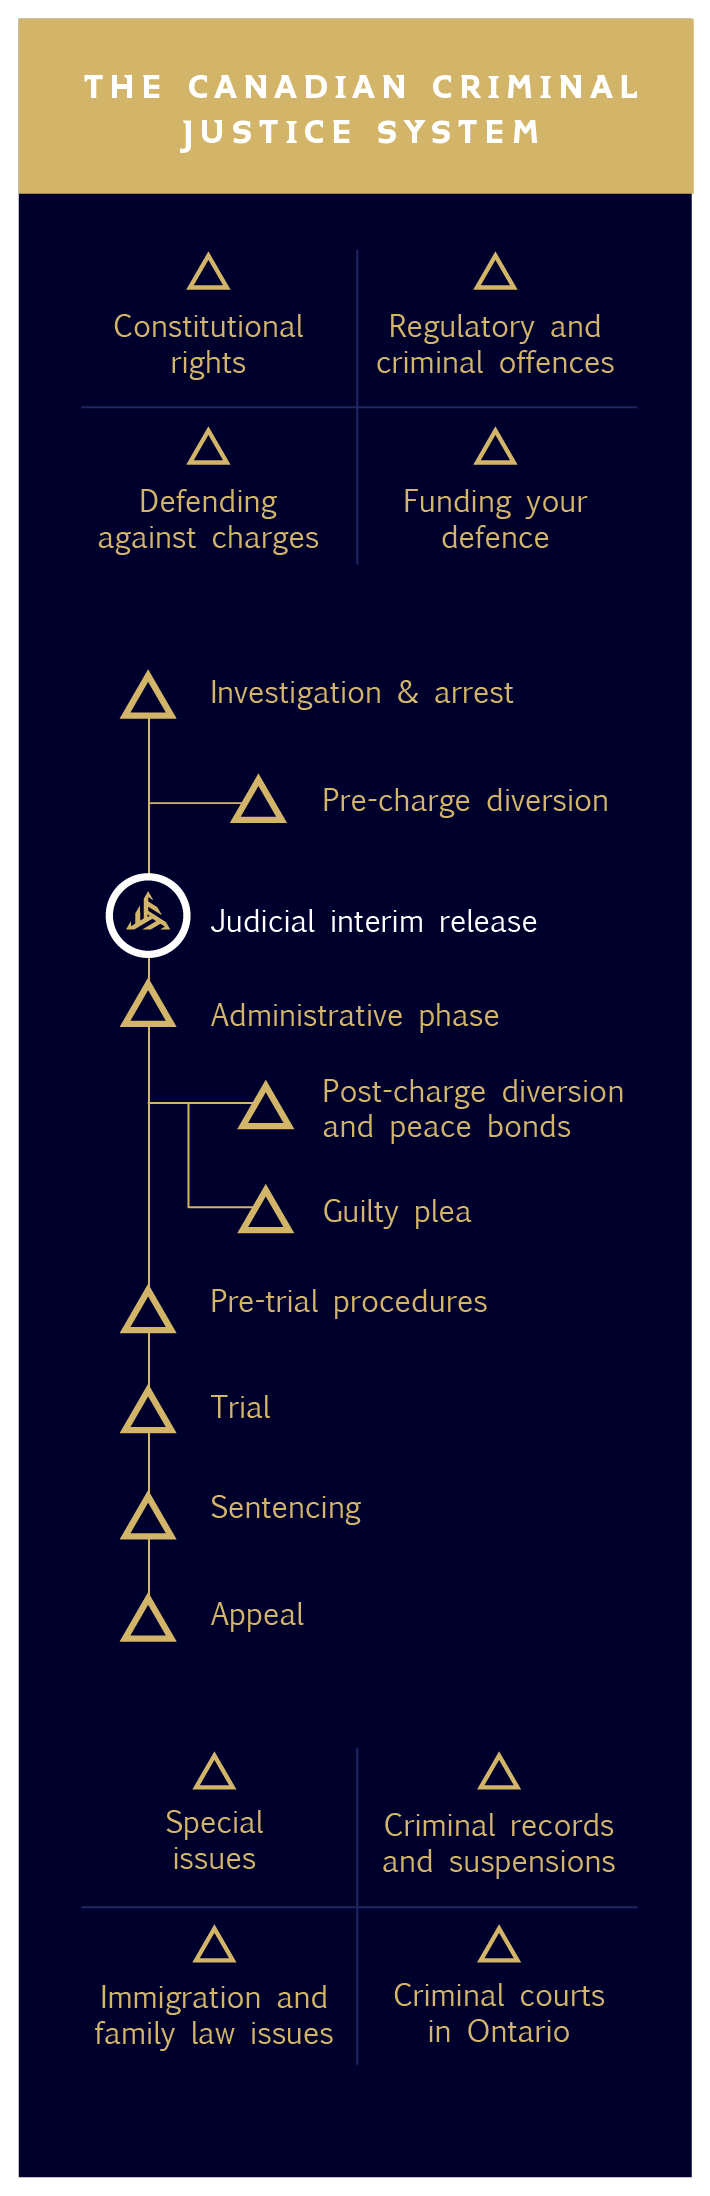 7 - Judicial interim release